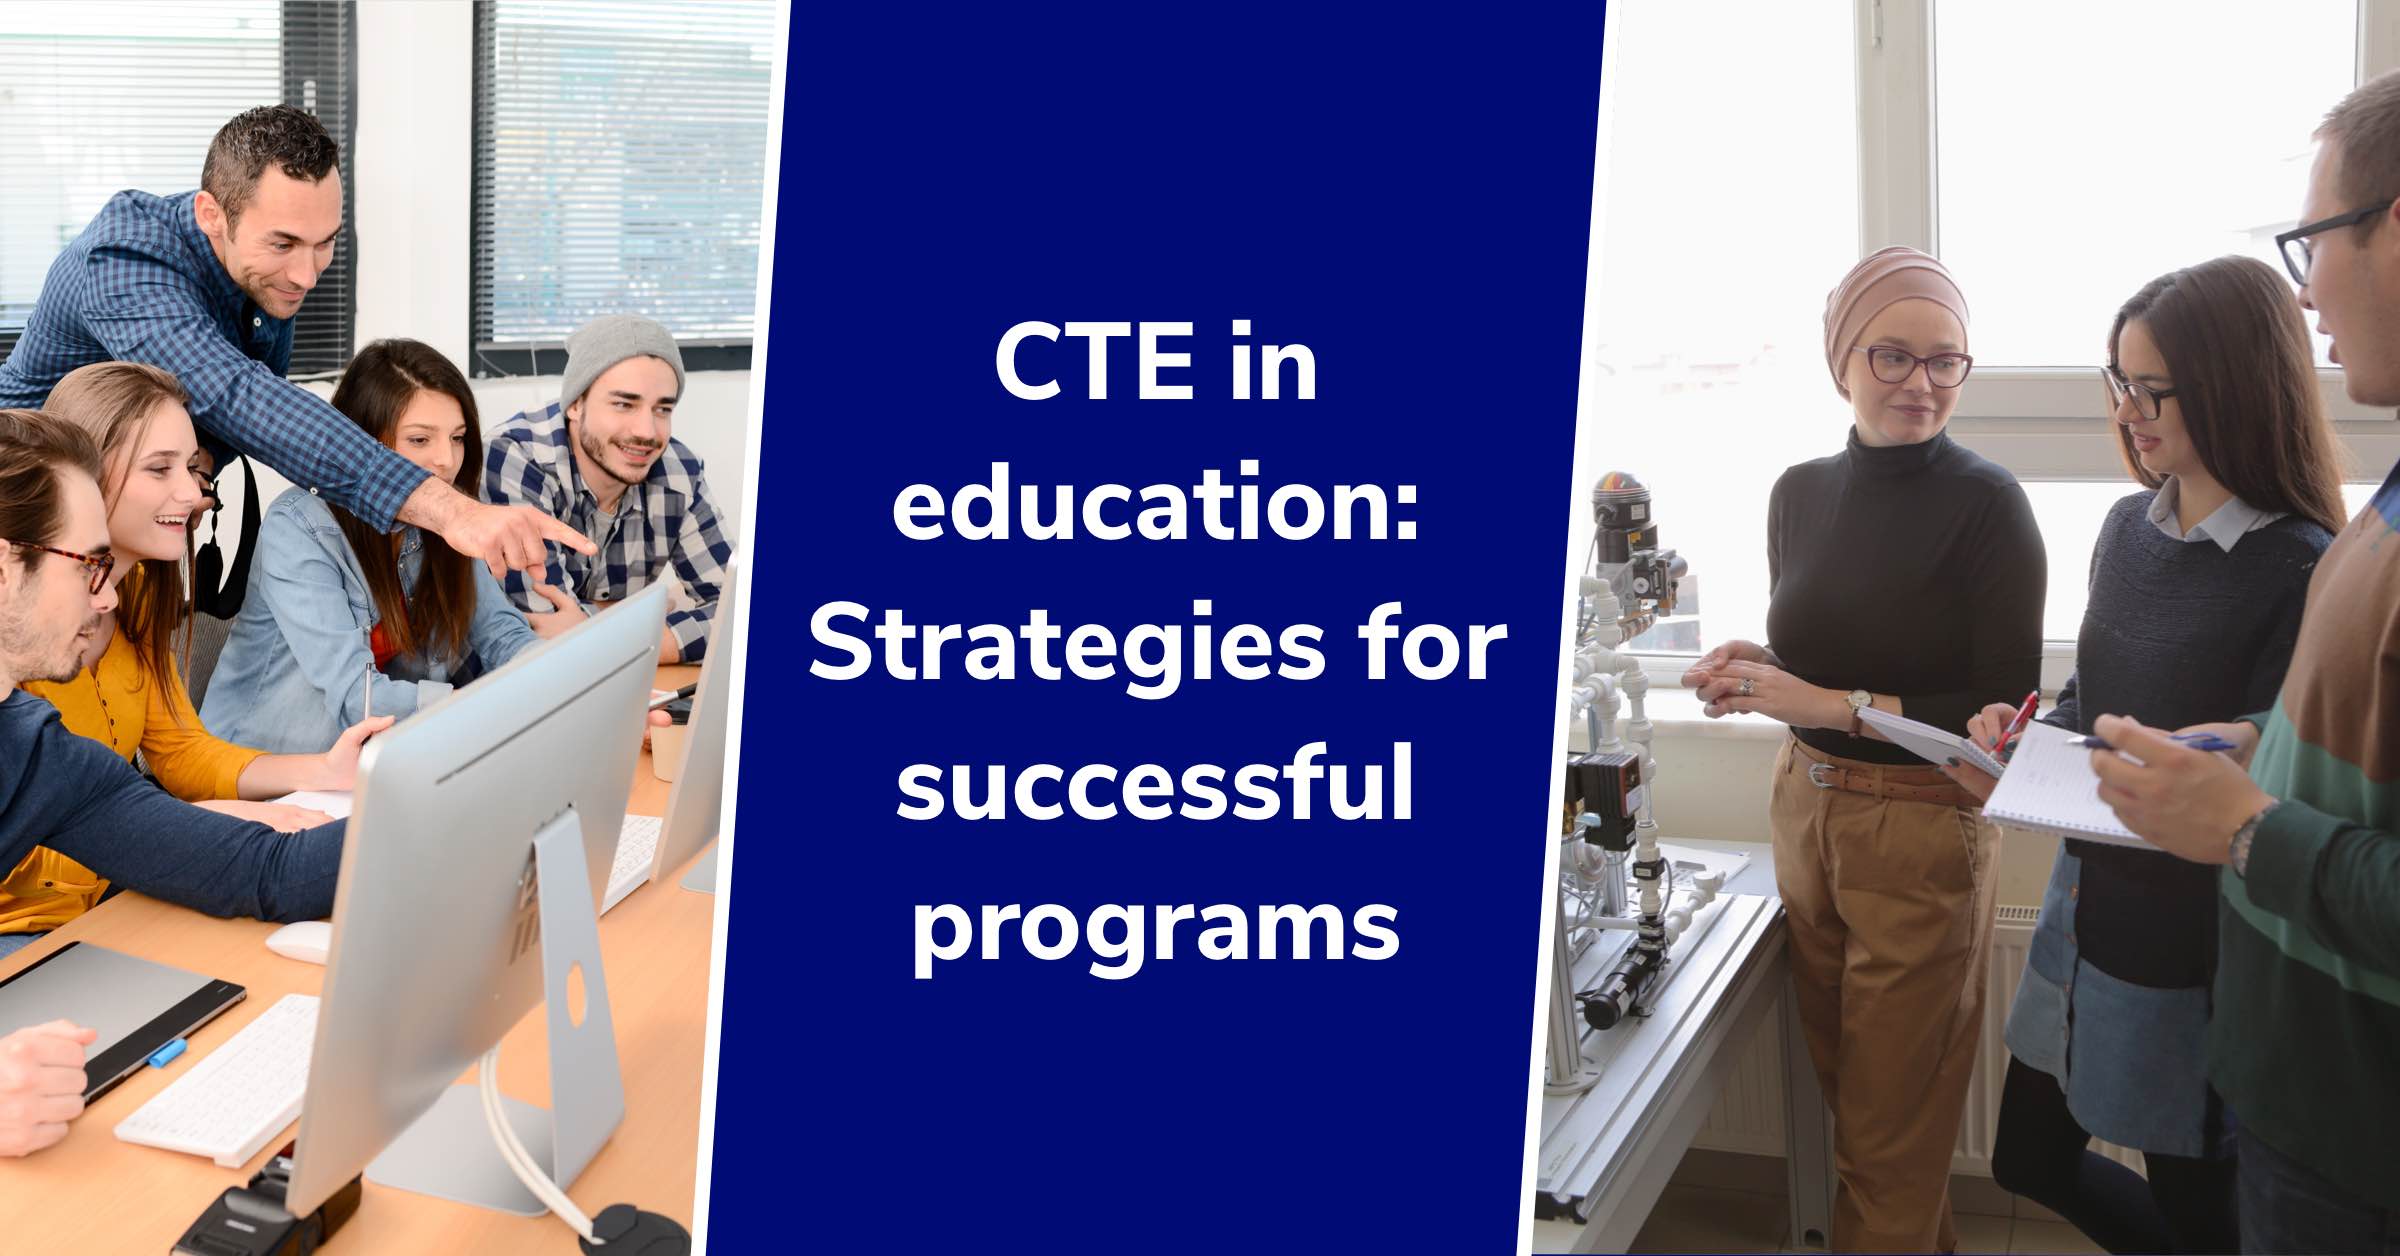 CTE in education: Strategies for successful programs